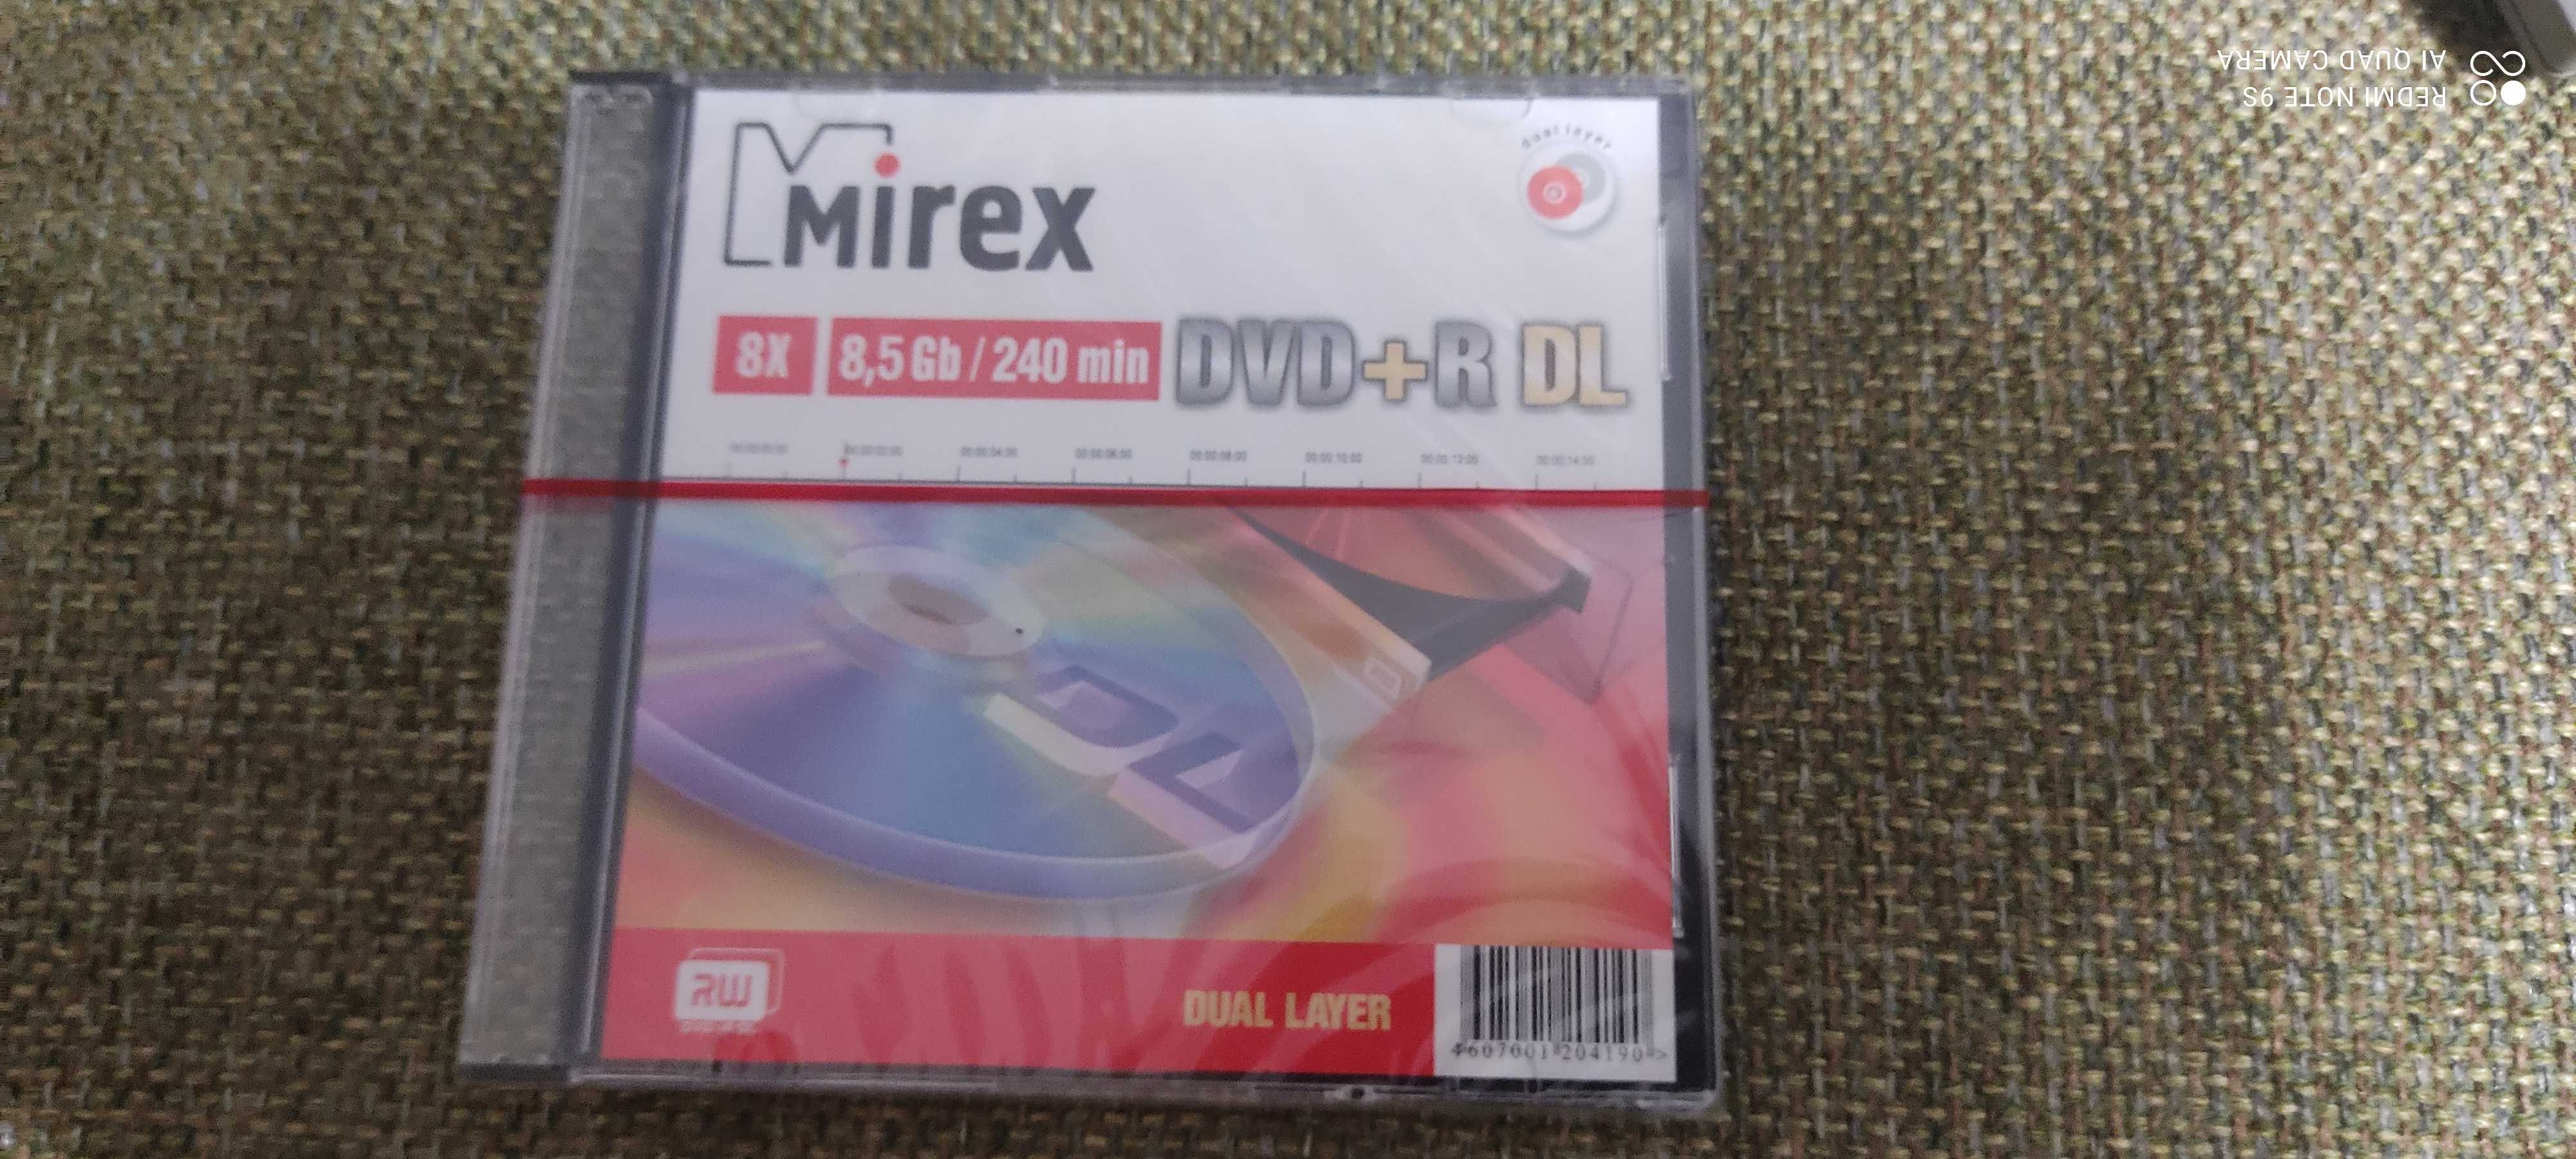 MIREX DVD+R DL 8Х 8,5 GB 240 минут